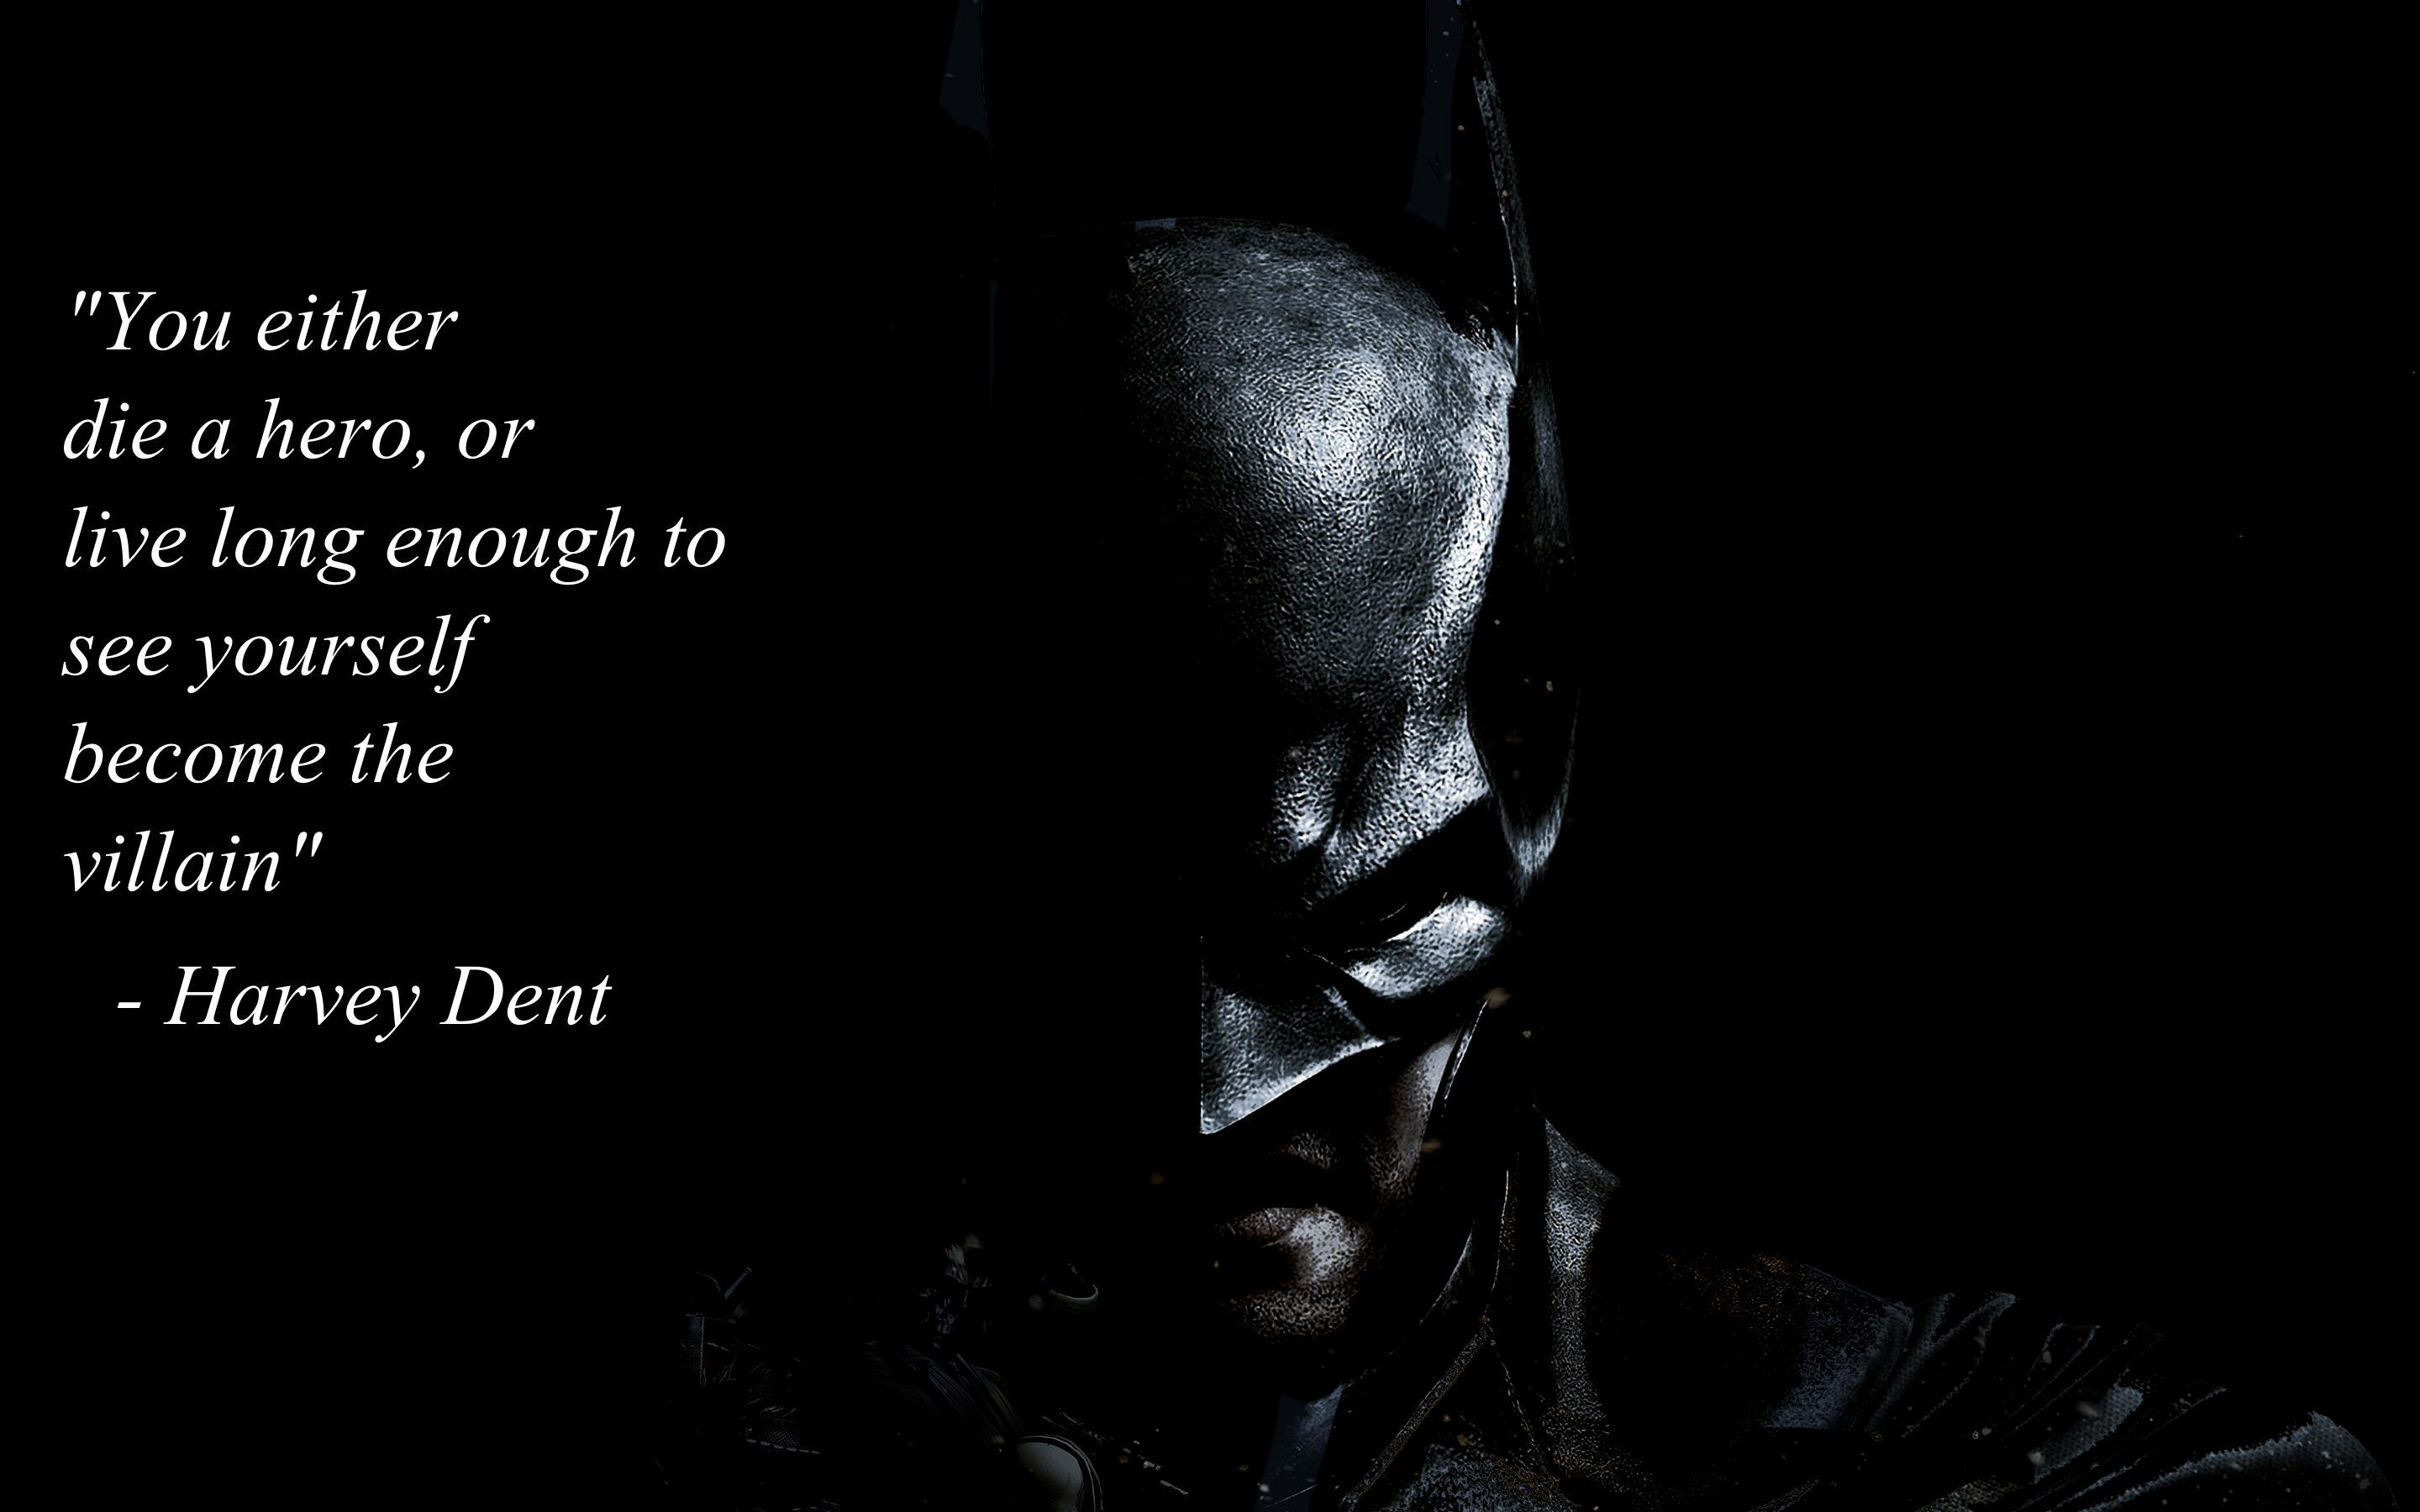 Harvey Dent Quote on a Batman background [2880x1800]